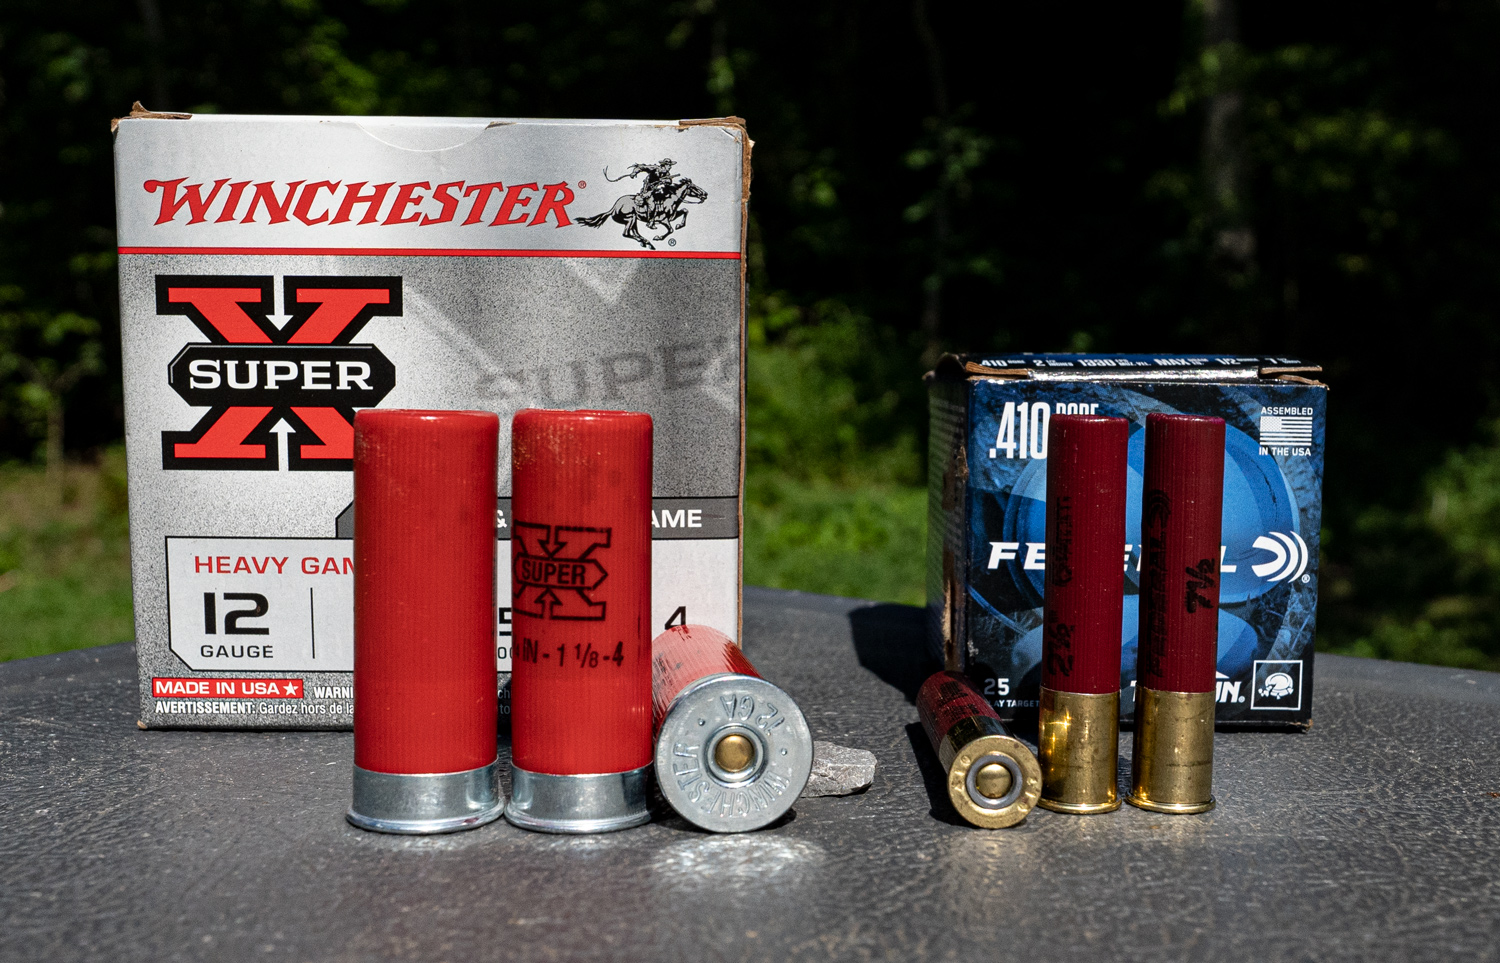 Winchester 12 gauge ammo vs Federal 410 bore ammo